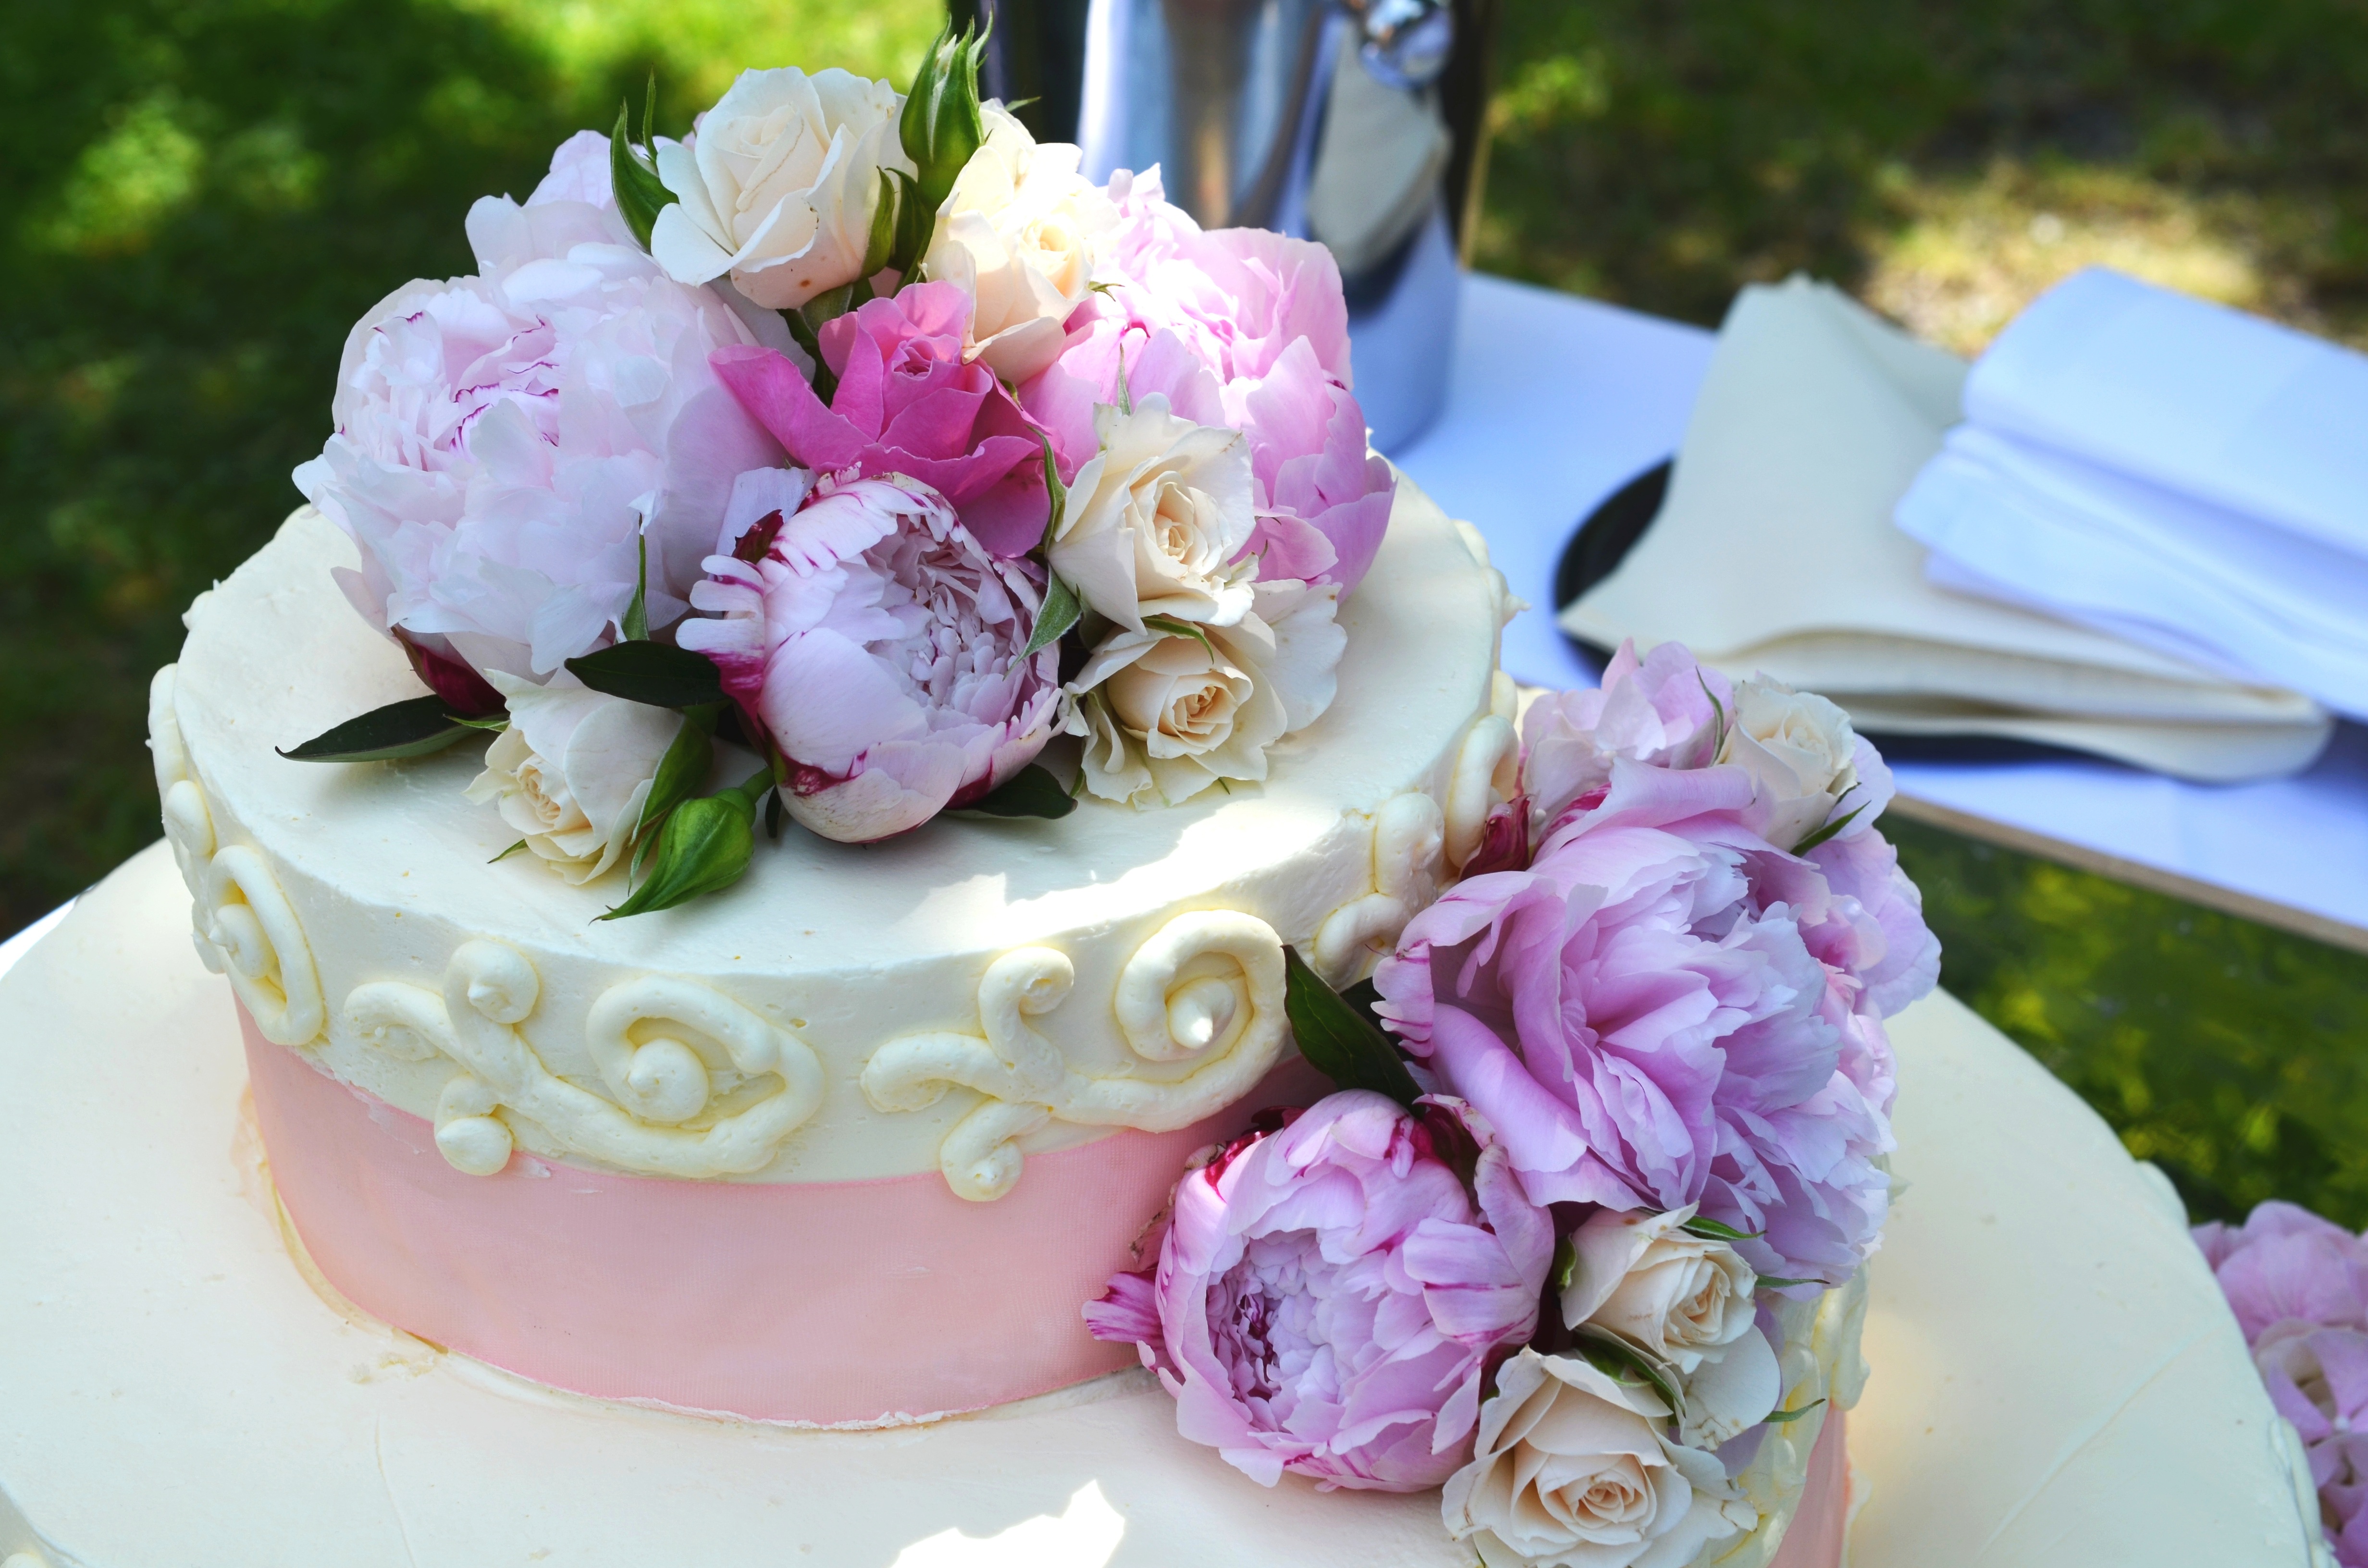 Free photo Wedding cake decorated with flowers